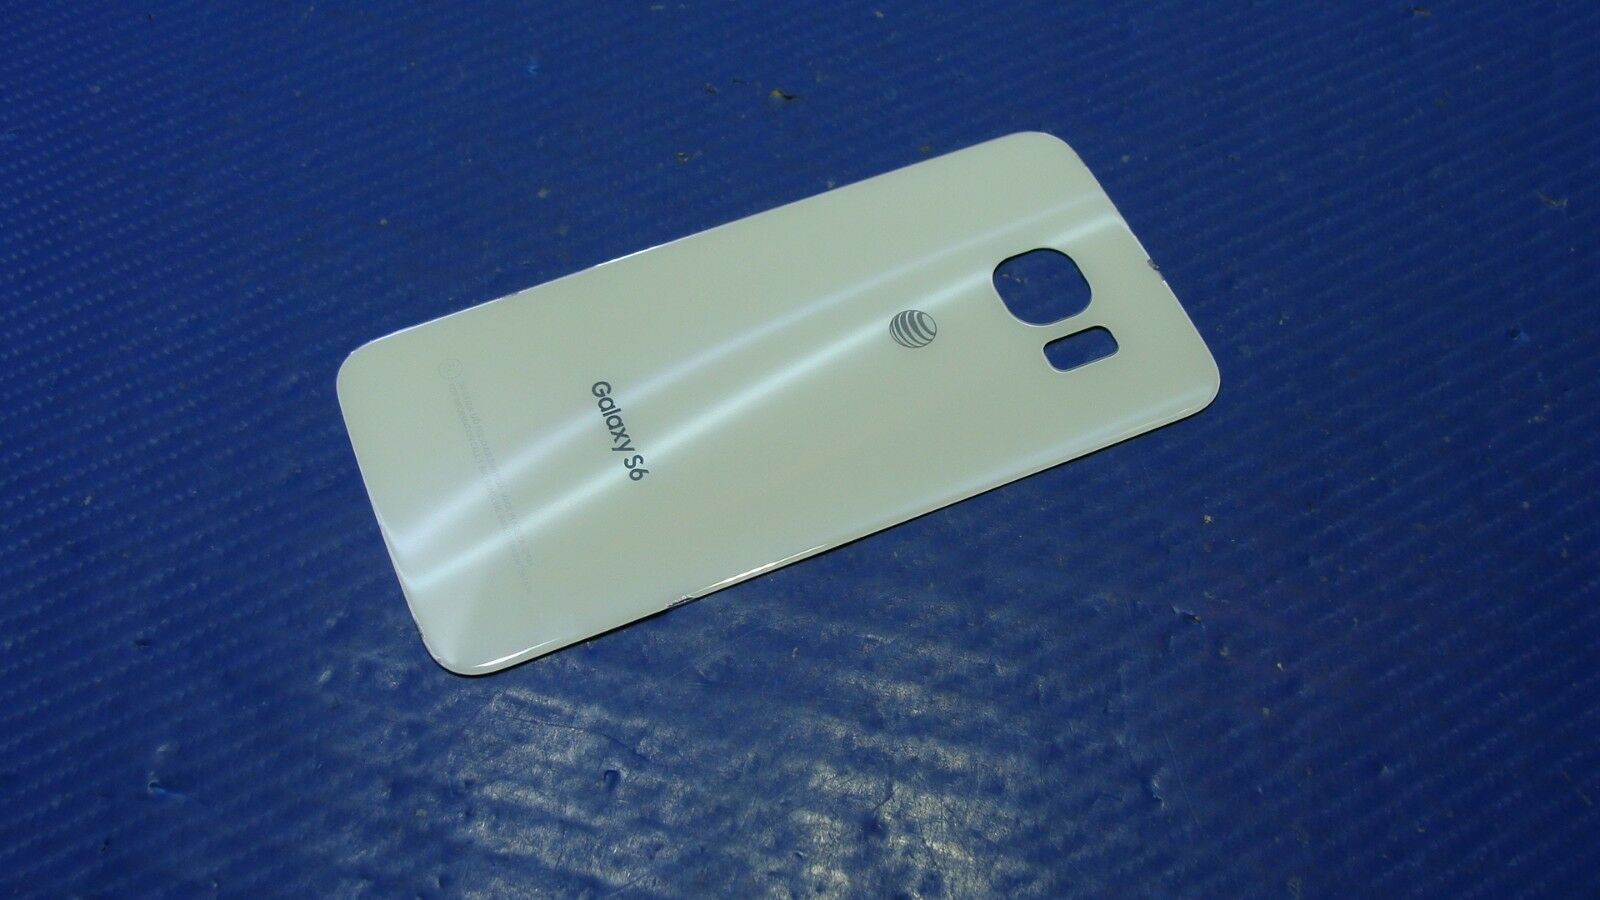 Samsung Galaxy S6 SM-G920A 5.1